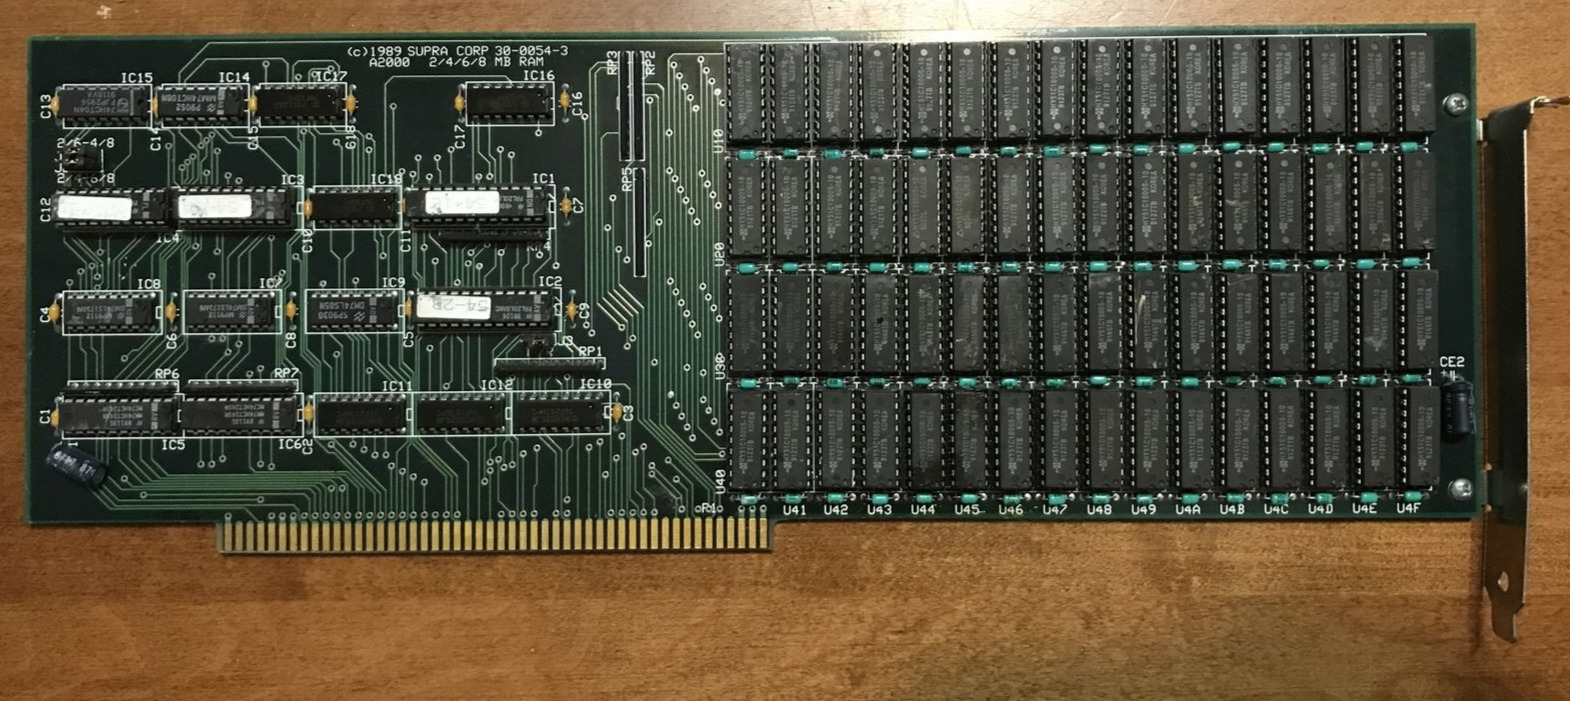 SUPRA CORP 30-0054-3 A2000 RAM 2/4/6/8 MB RAM FULL COMMODORE AMIGA 2000